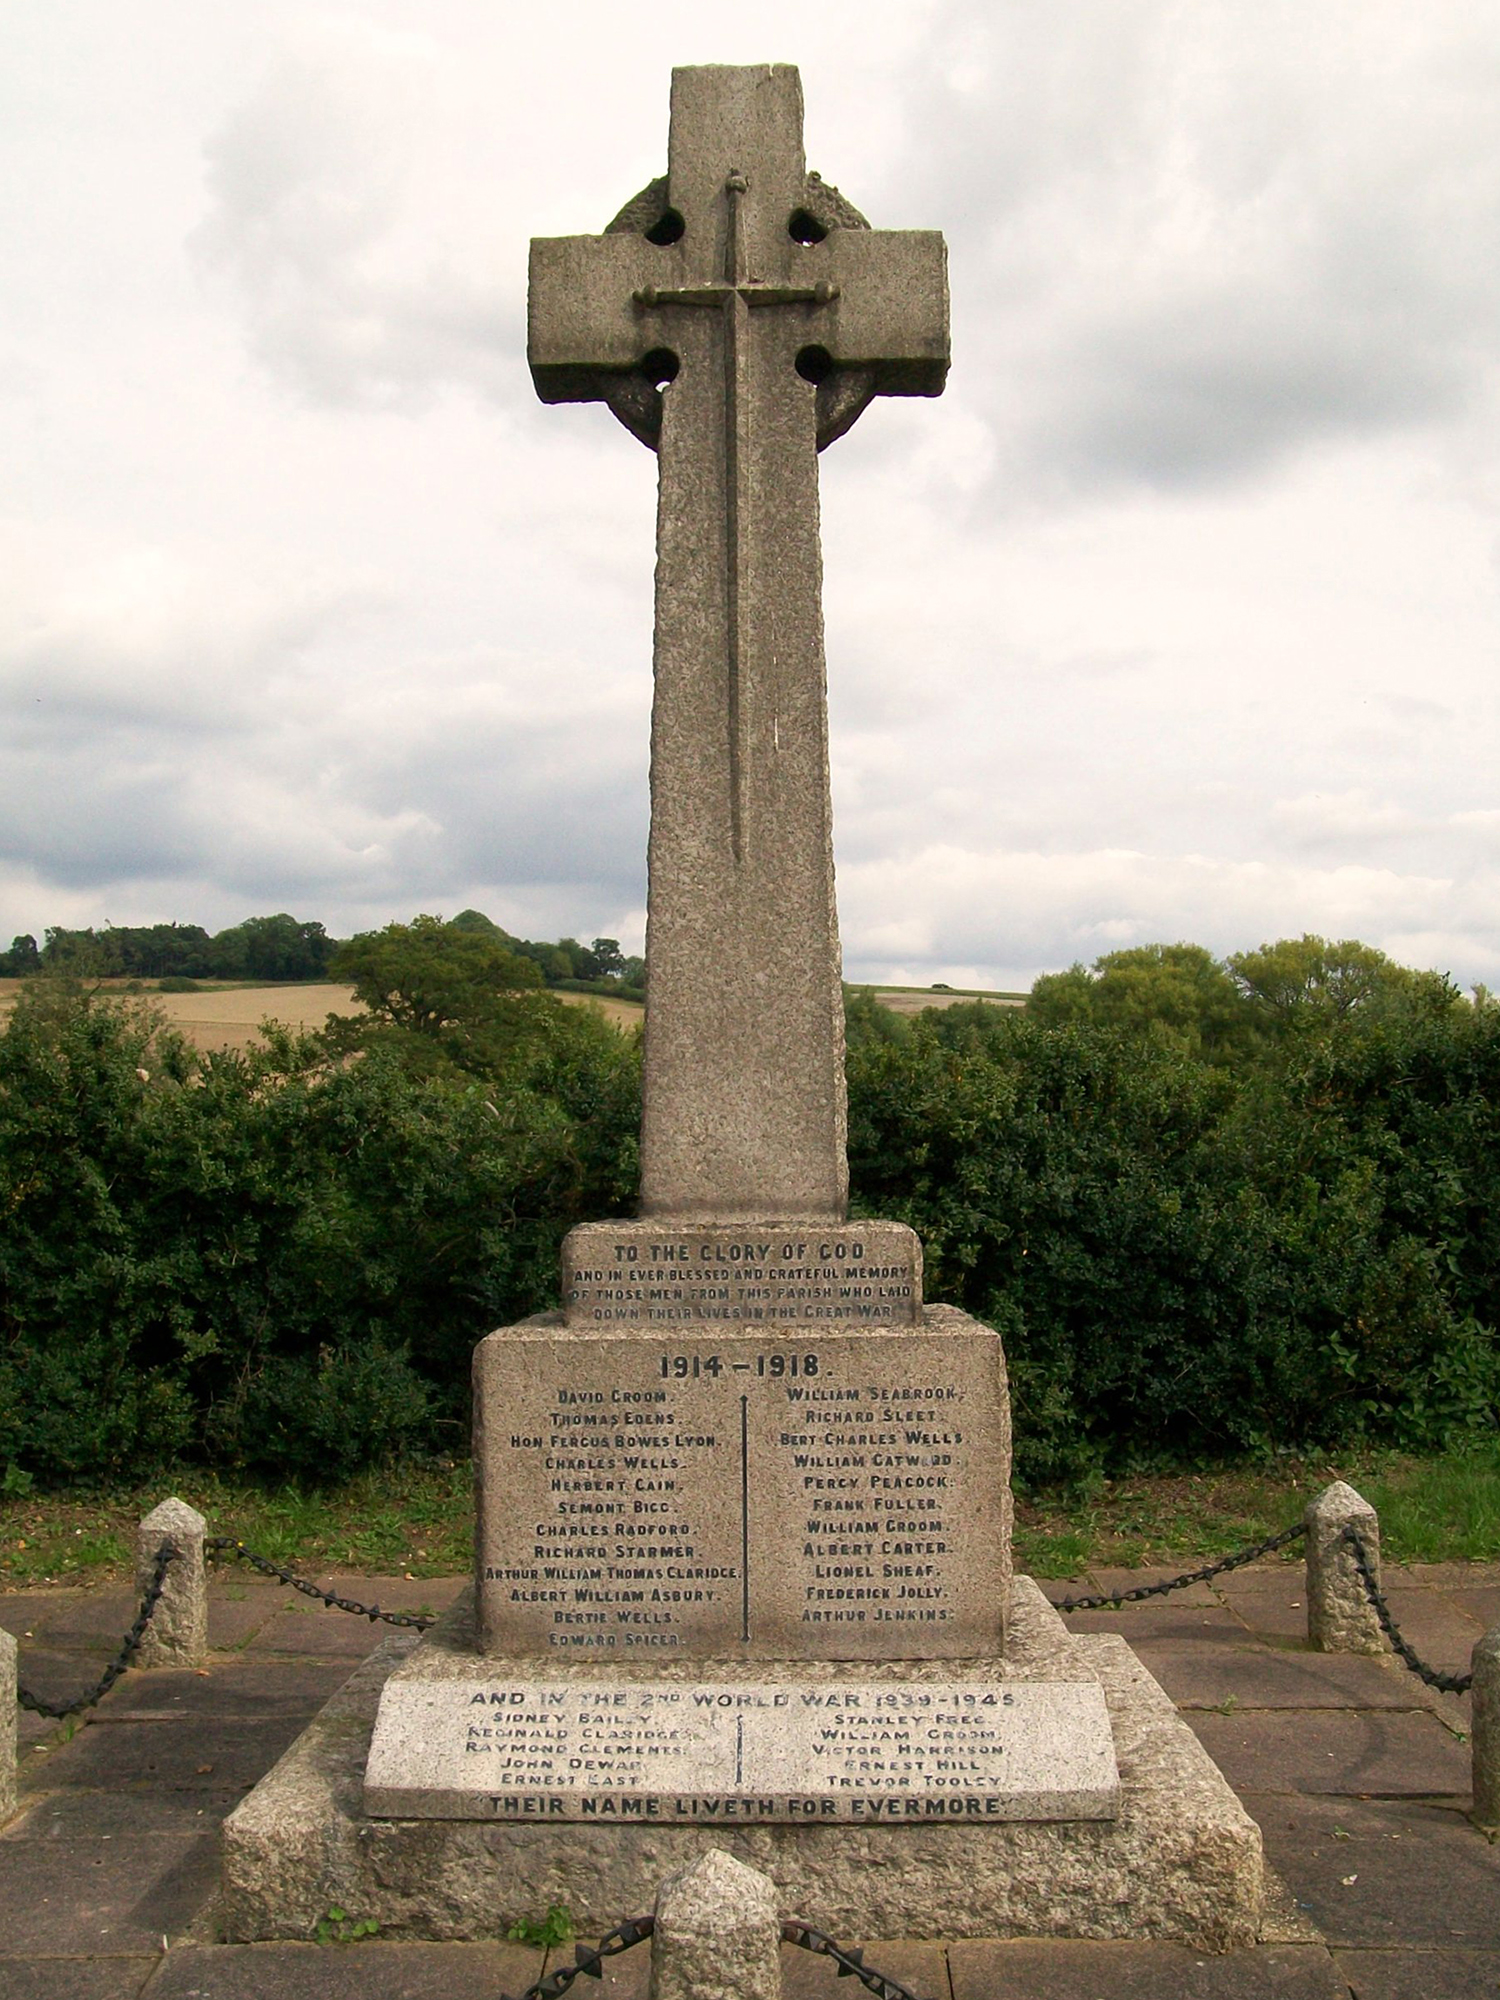 The roadside cross for the parish of St Paul’s Walden Bury